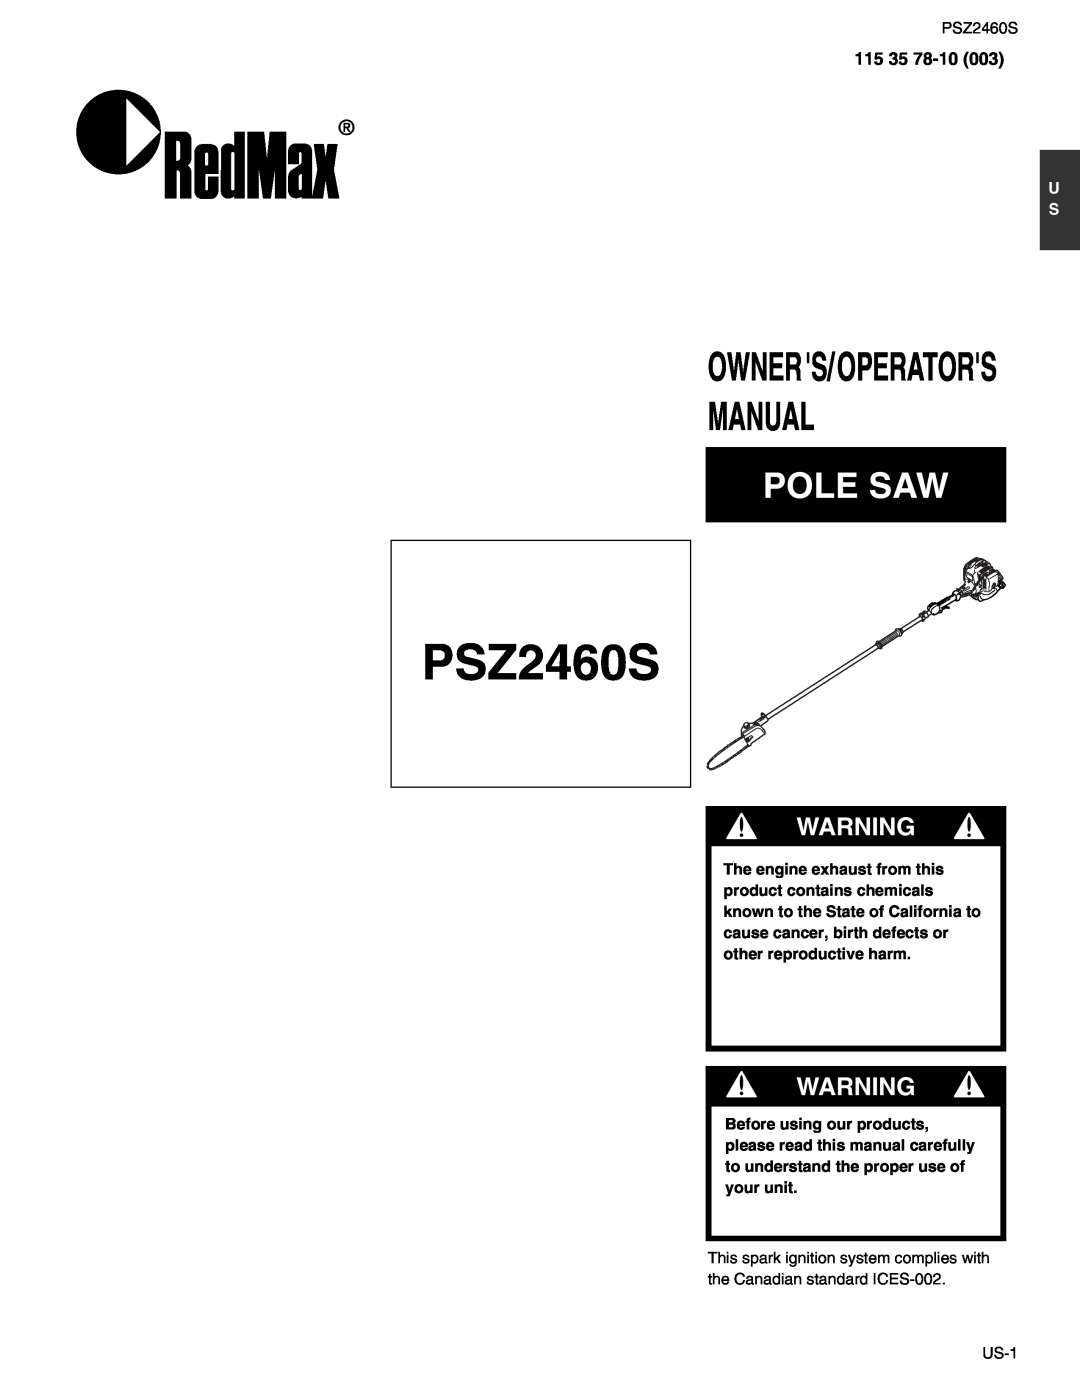 RedMax PSZ2460S manual Manual, Pole Saw, Owners/Operators, 115 